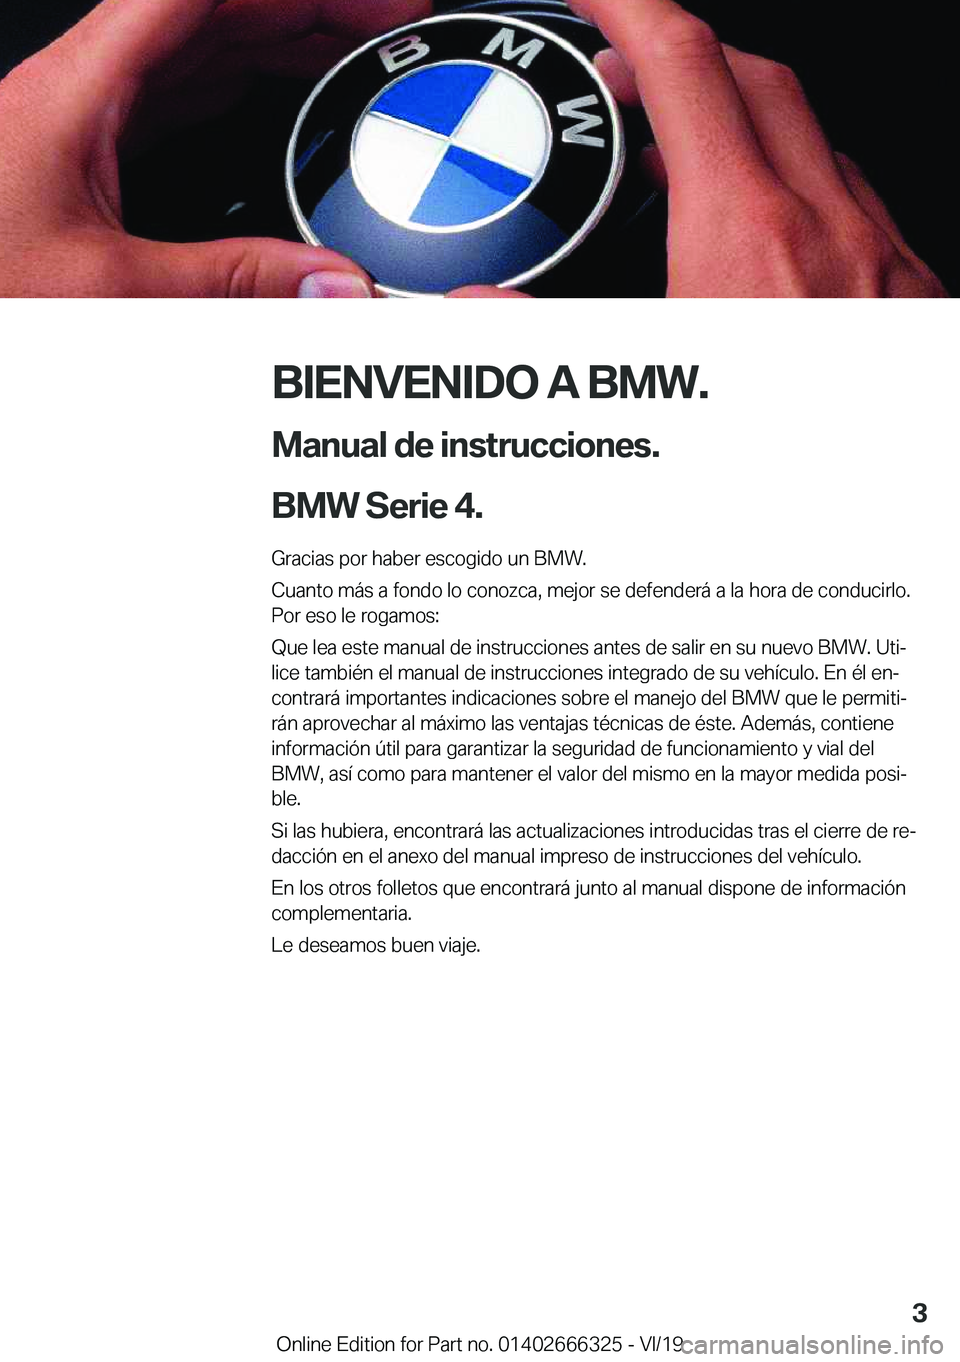 BMW 4 SERIES COUPE 2020  Manuales de Empleo (in Spanish) �B�I�E�N�V�E�N�I�D�O��A��B�M�W�.
�M�a�n�u�a�l��d�e��i�n�s�t�r�u�c�c�i�o�n�e�s�.
�B�M�W��S�e�r�i�e��4�.� �G�r�a�c�i�a�s��p�o�r��h�a�b�e�r��e�s�c�o�g�i�d�o��u�n��B�M�W�.
�C�u�a�n�t�o��m�